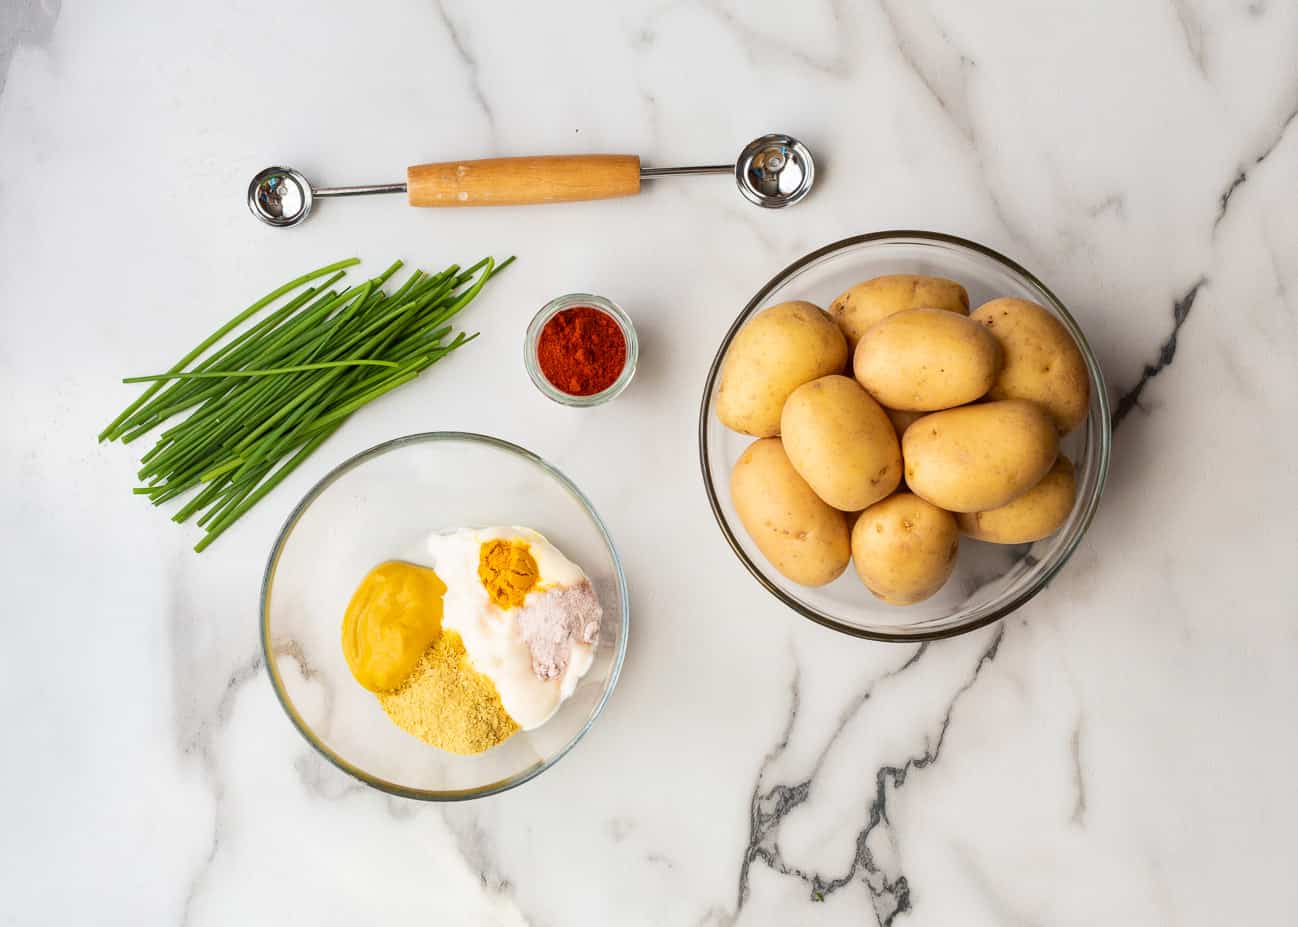 Ingredients for making deviled egg potatoes: Creamer potatoes, fresh chives, paprika, a bowl containing vegan mayo, nutritional yeast, mustard, vinegar, and black salt.